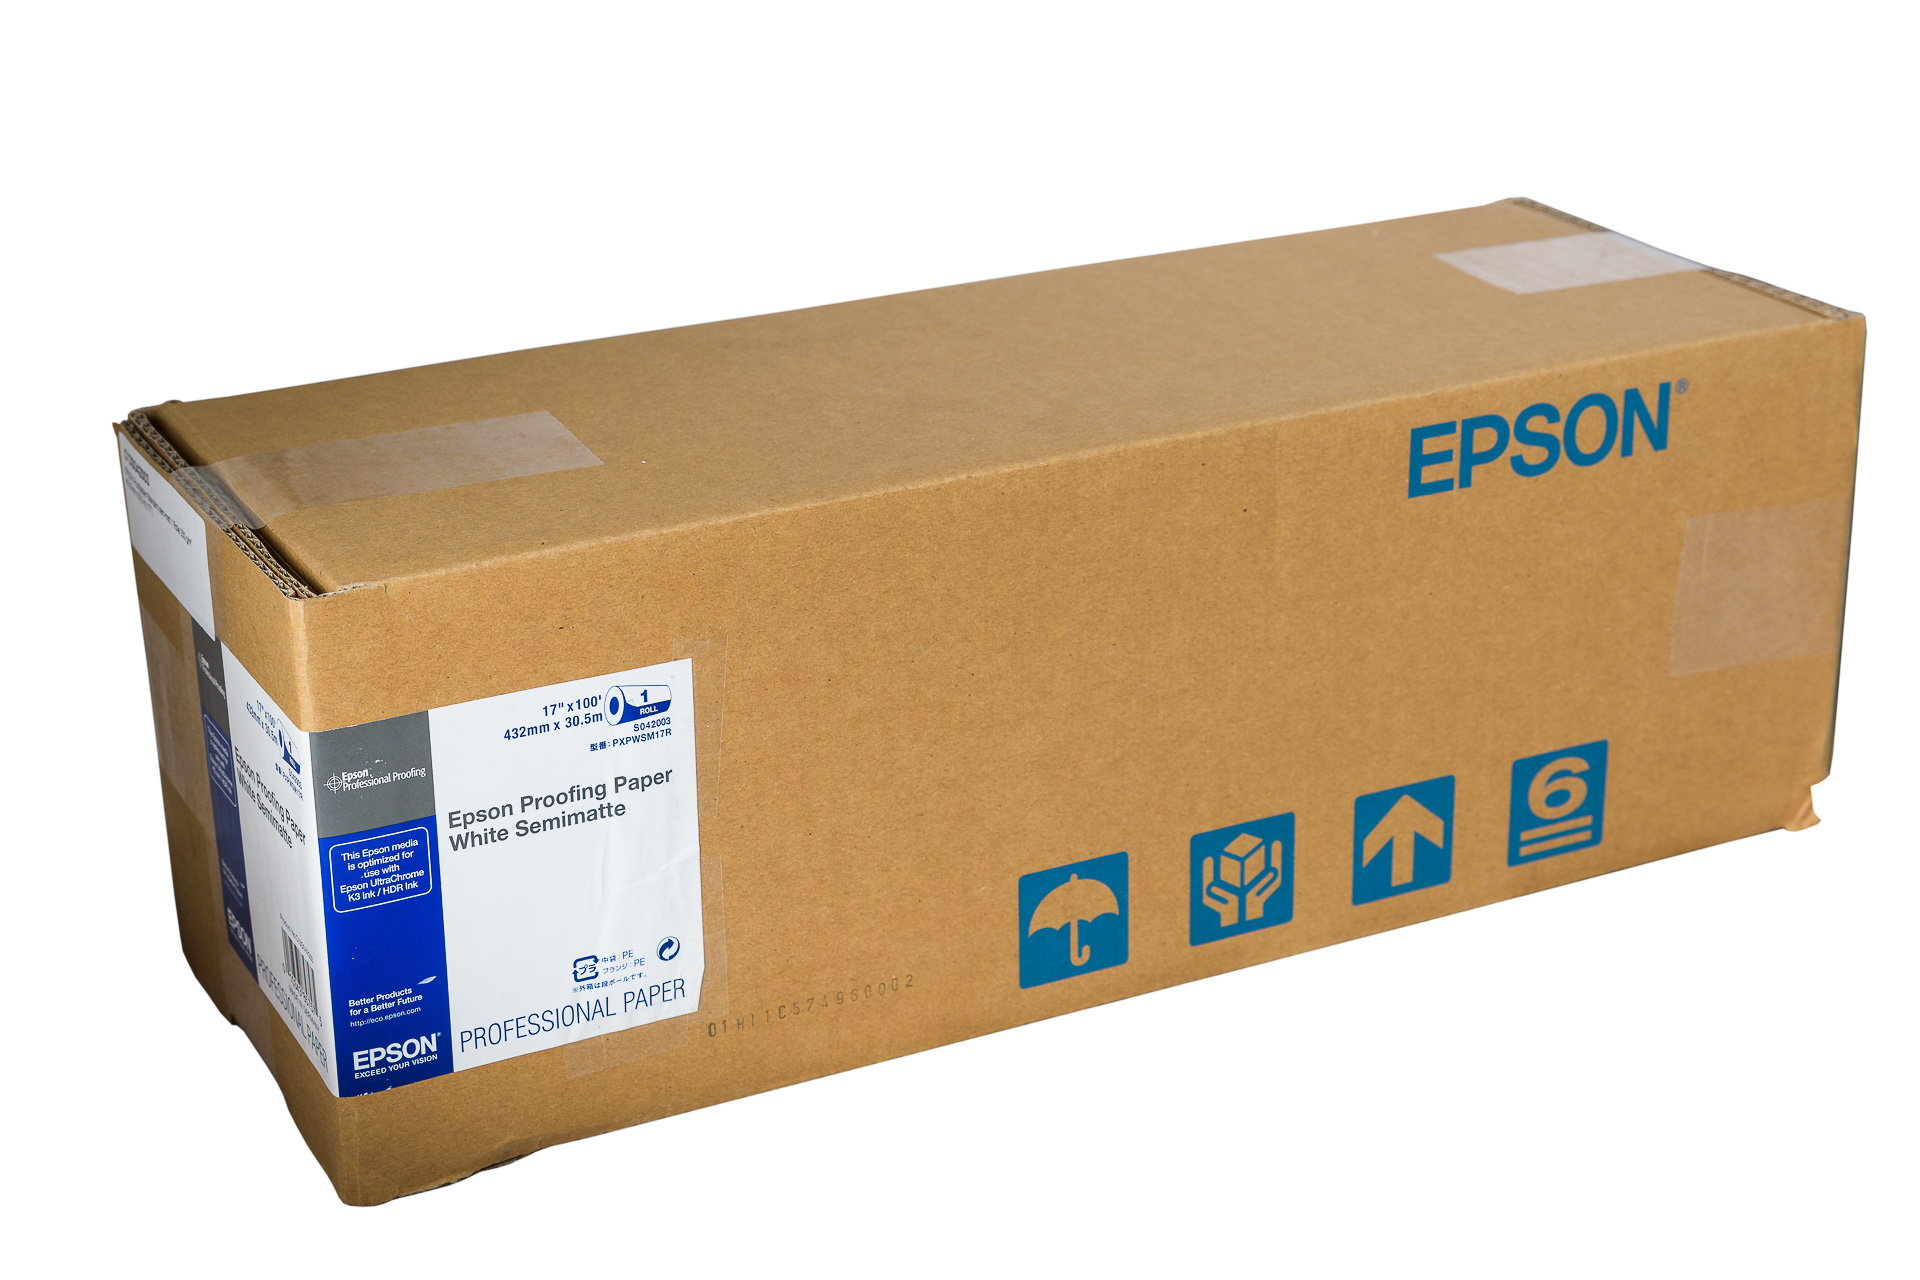 Epson Proofing Paper White Semimatte